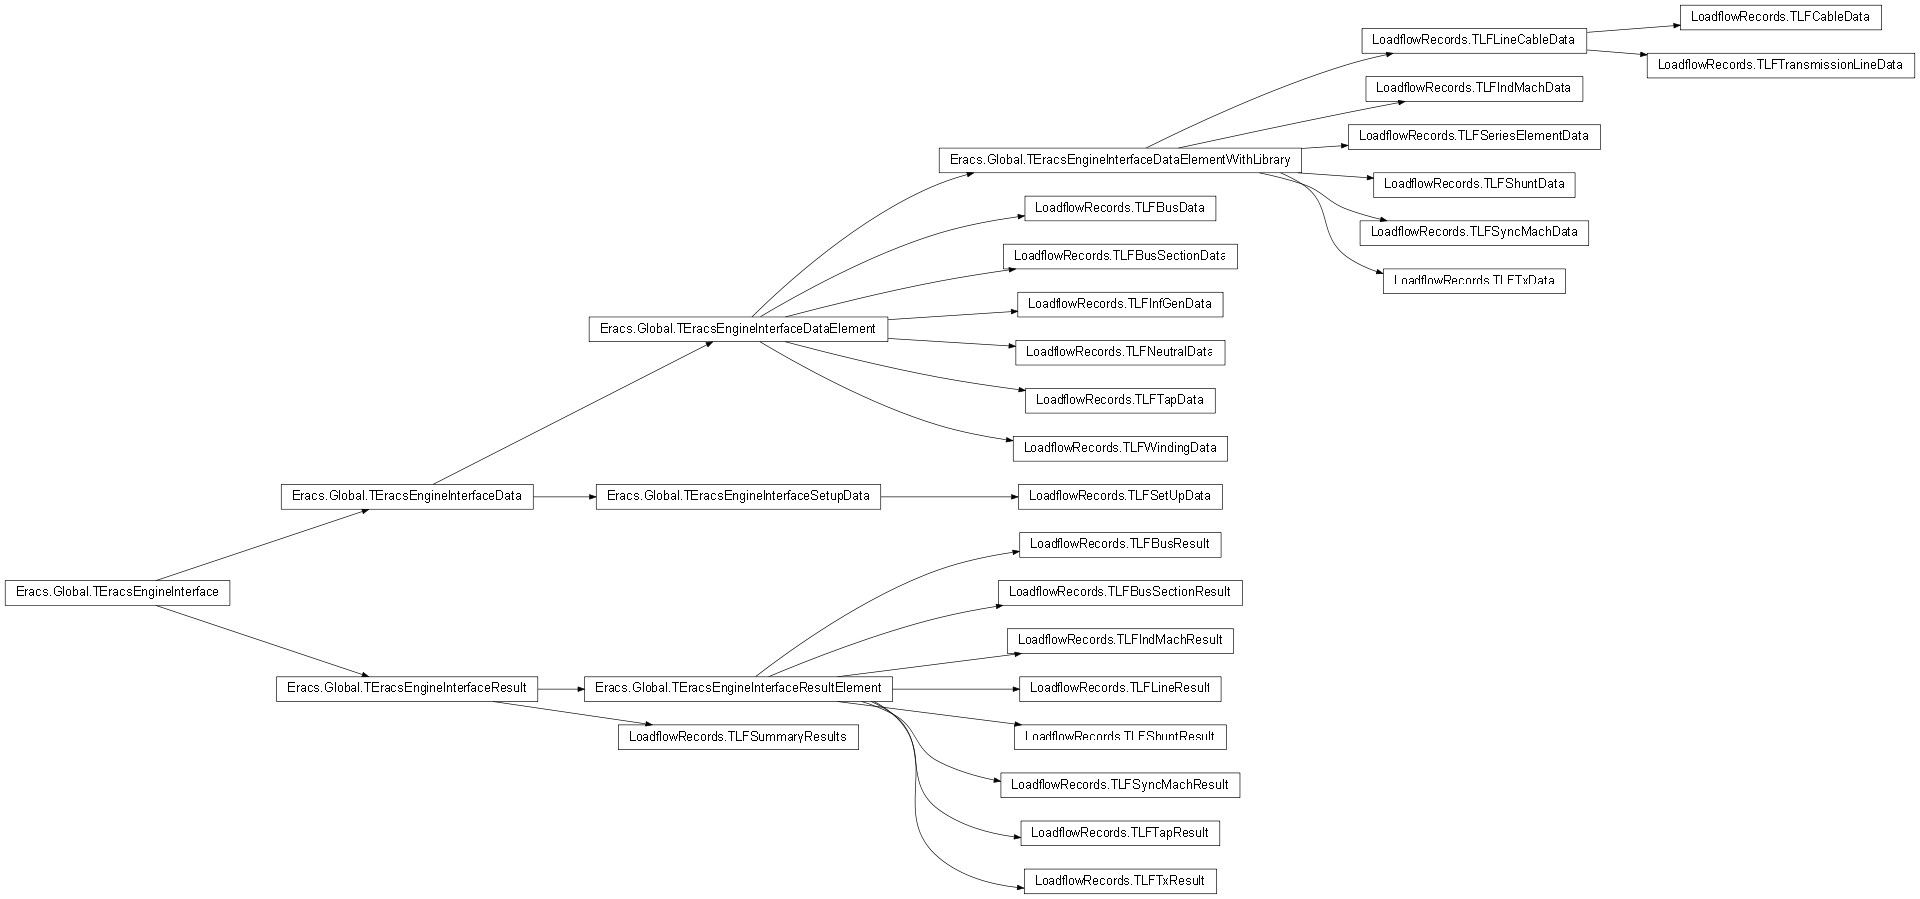 Inheritance diagram of LoadflowRecords